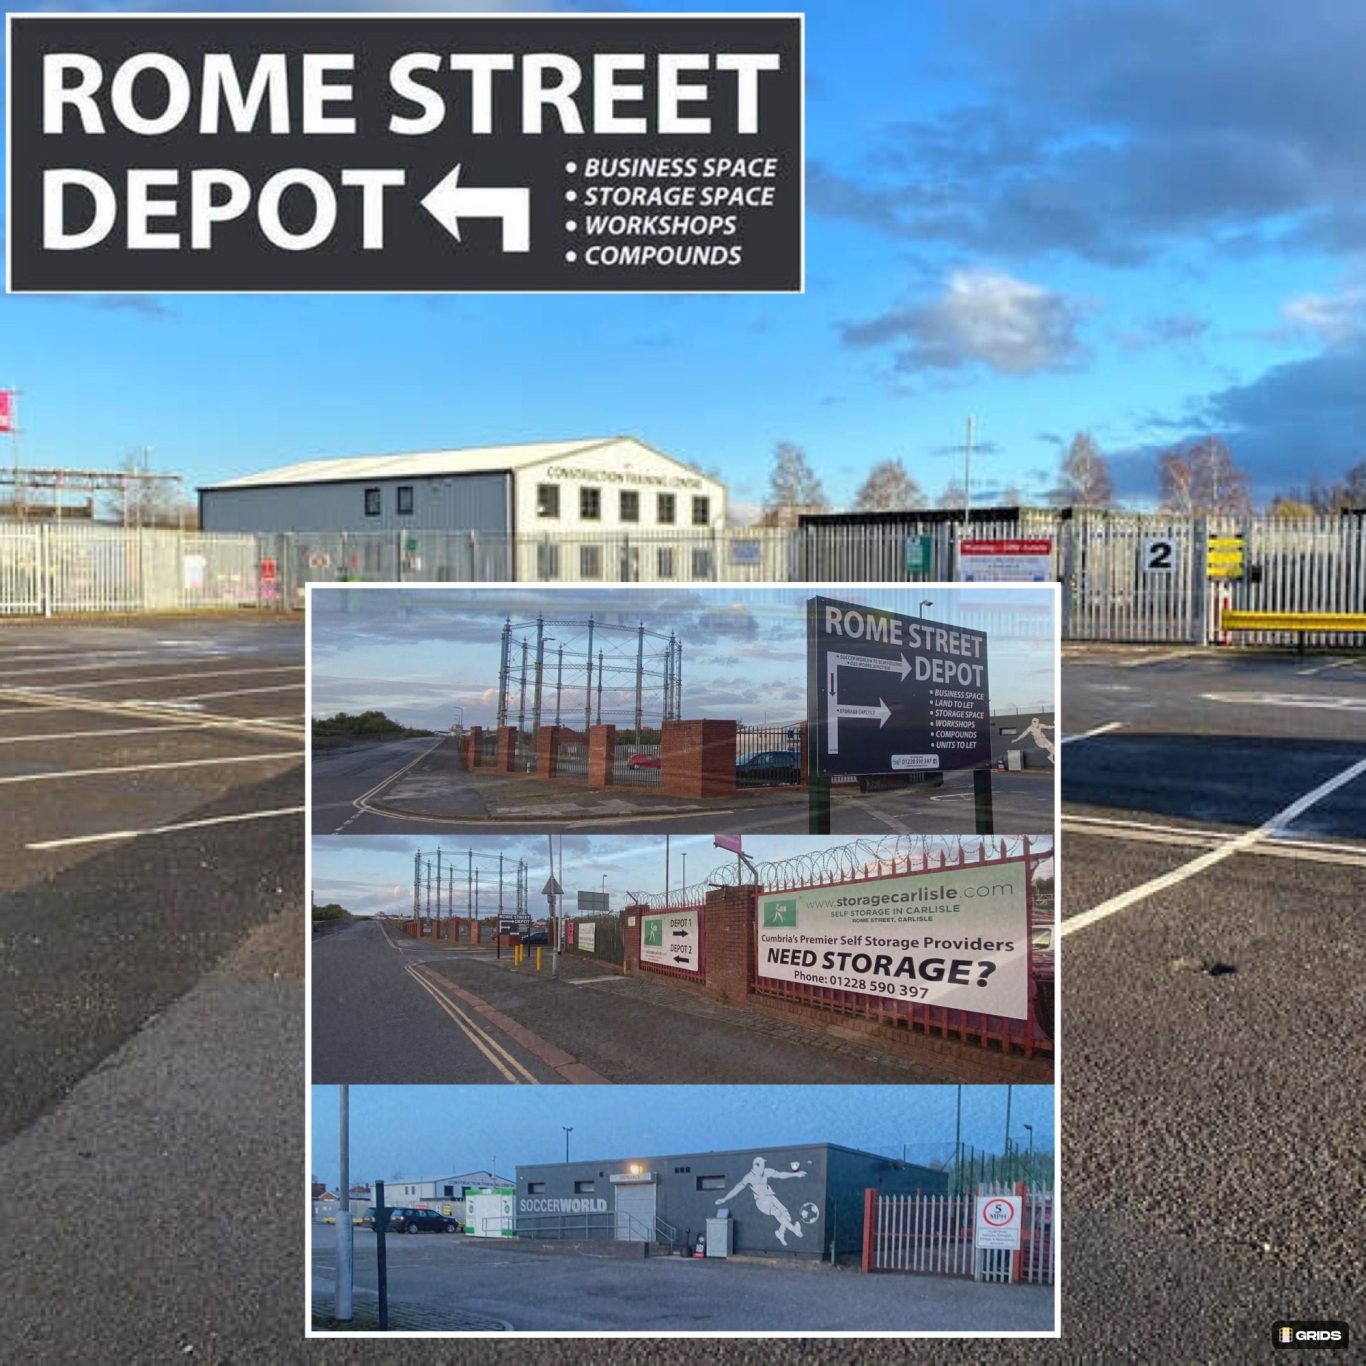 Rome Street depot car park and entrances